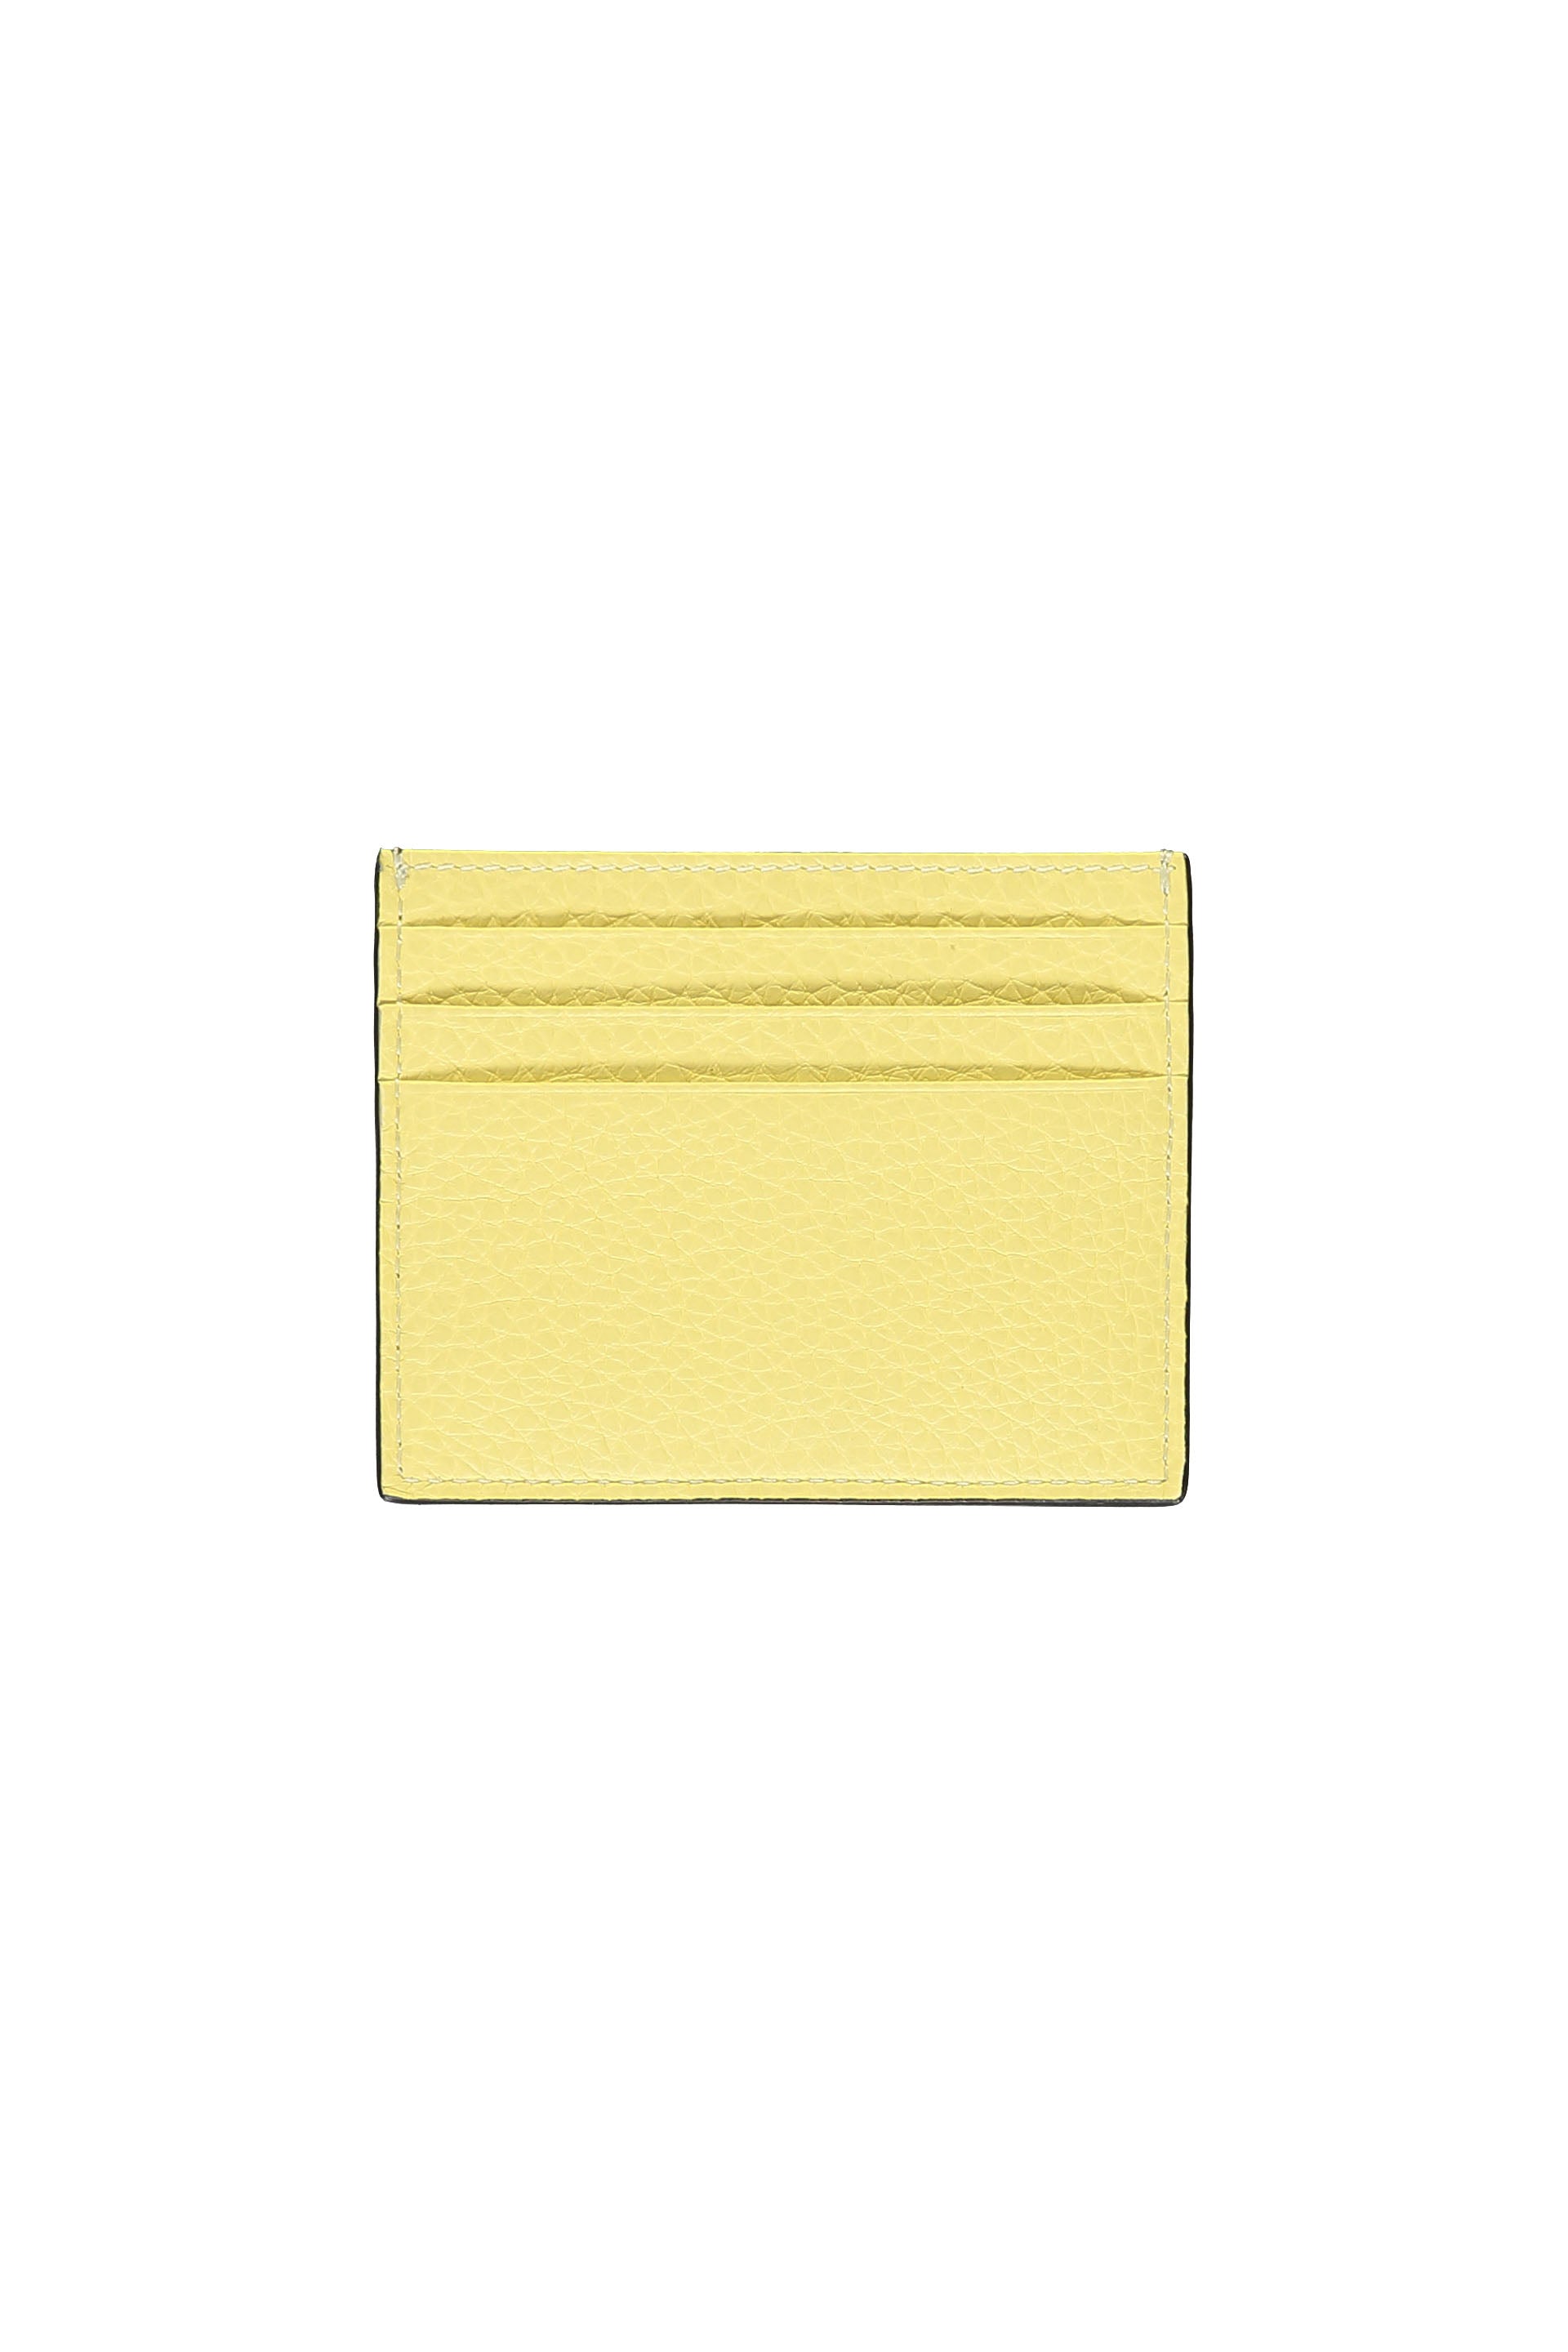 Leather card holder-Fendi-OUTLET-SALE-TU-ARCHIVIST